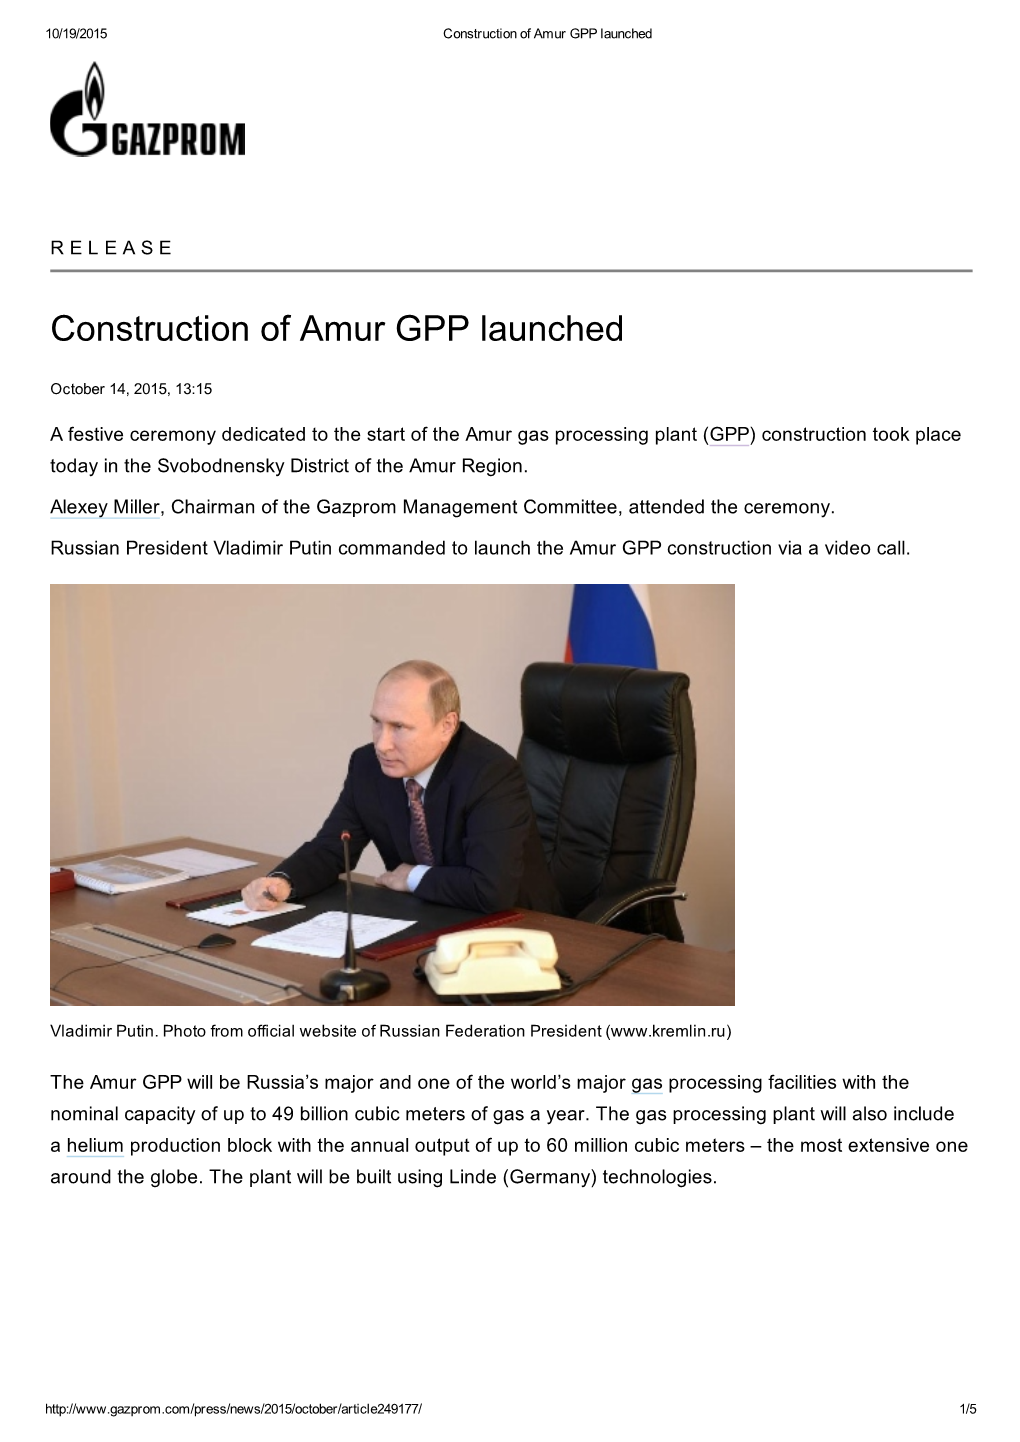 Construction of Amur GPP Launched